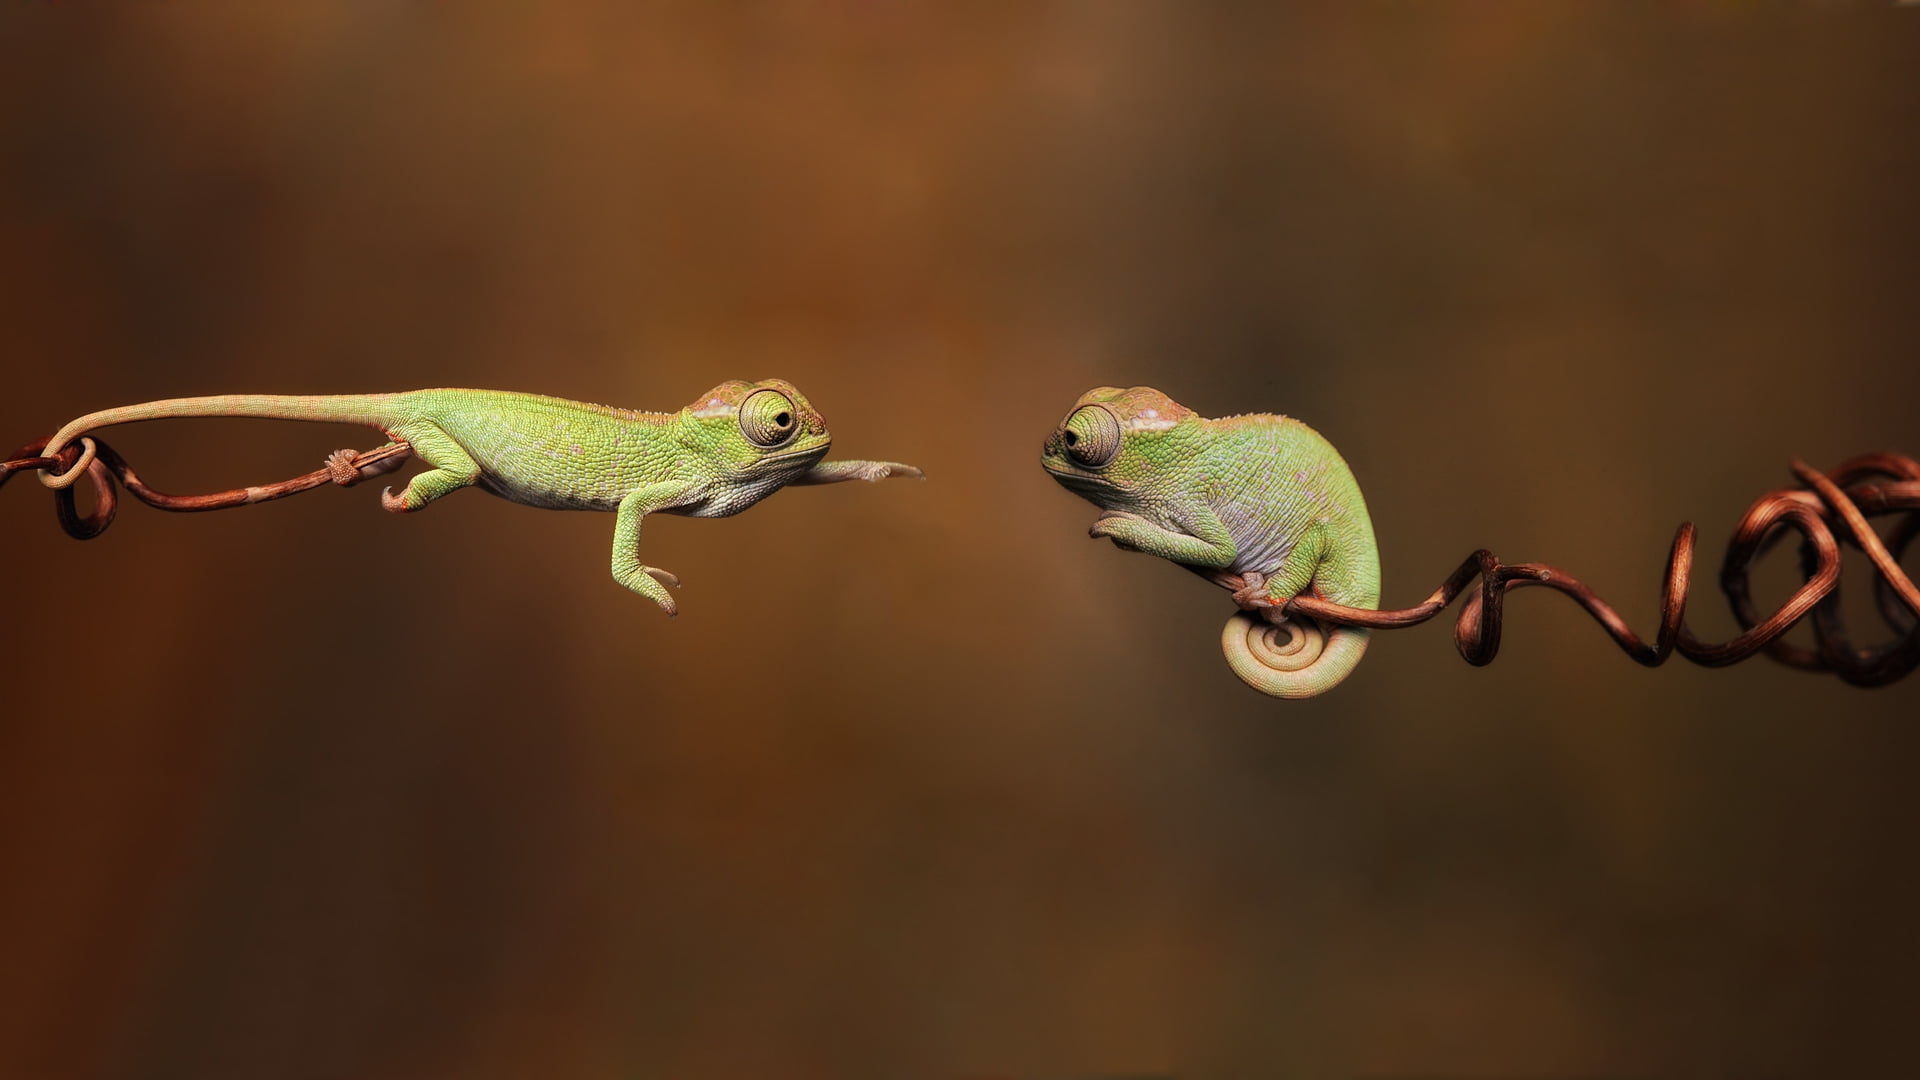 Gecko reaching wildlife photography